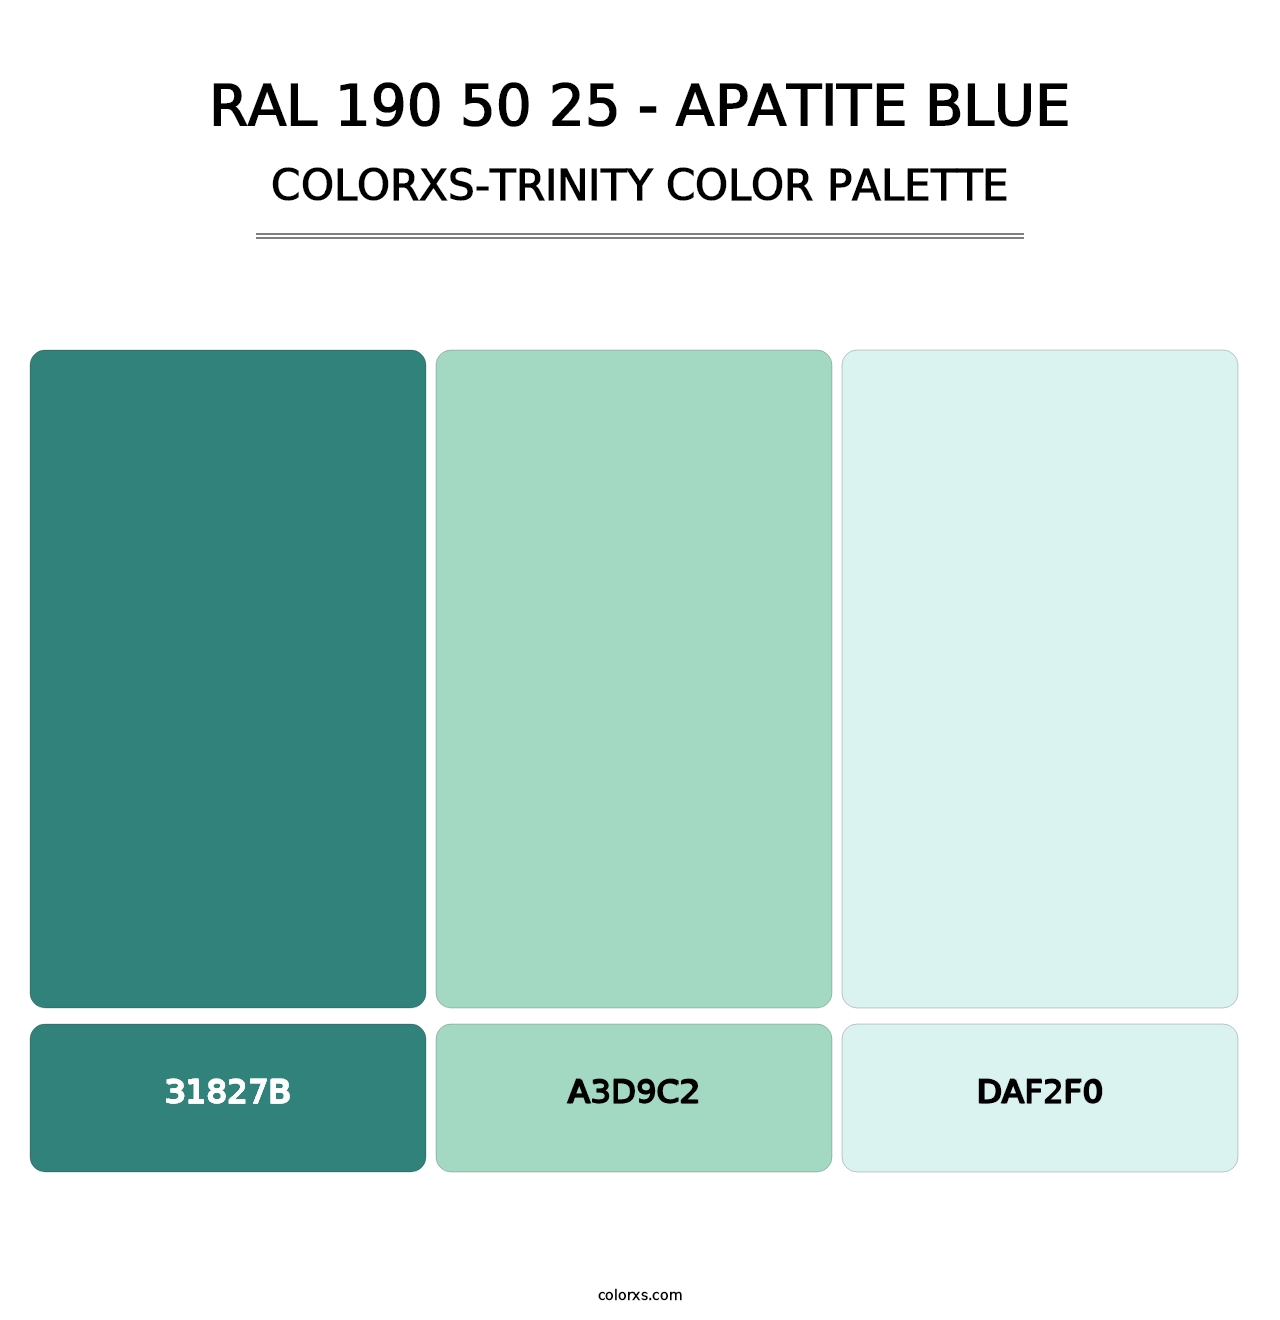 RAL 190 50 25 - Apatite Blue - Colorxs Trinity Palette